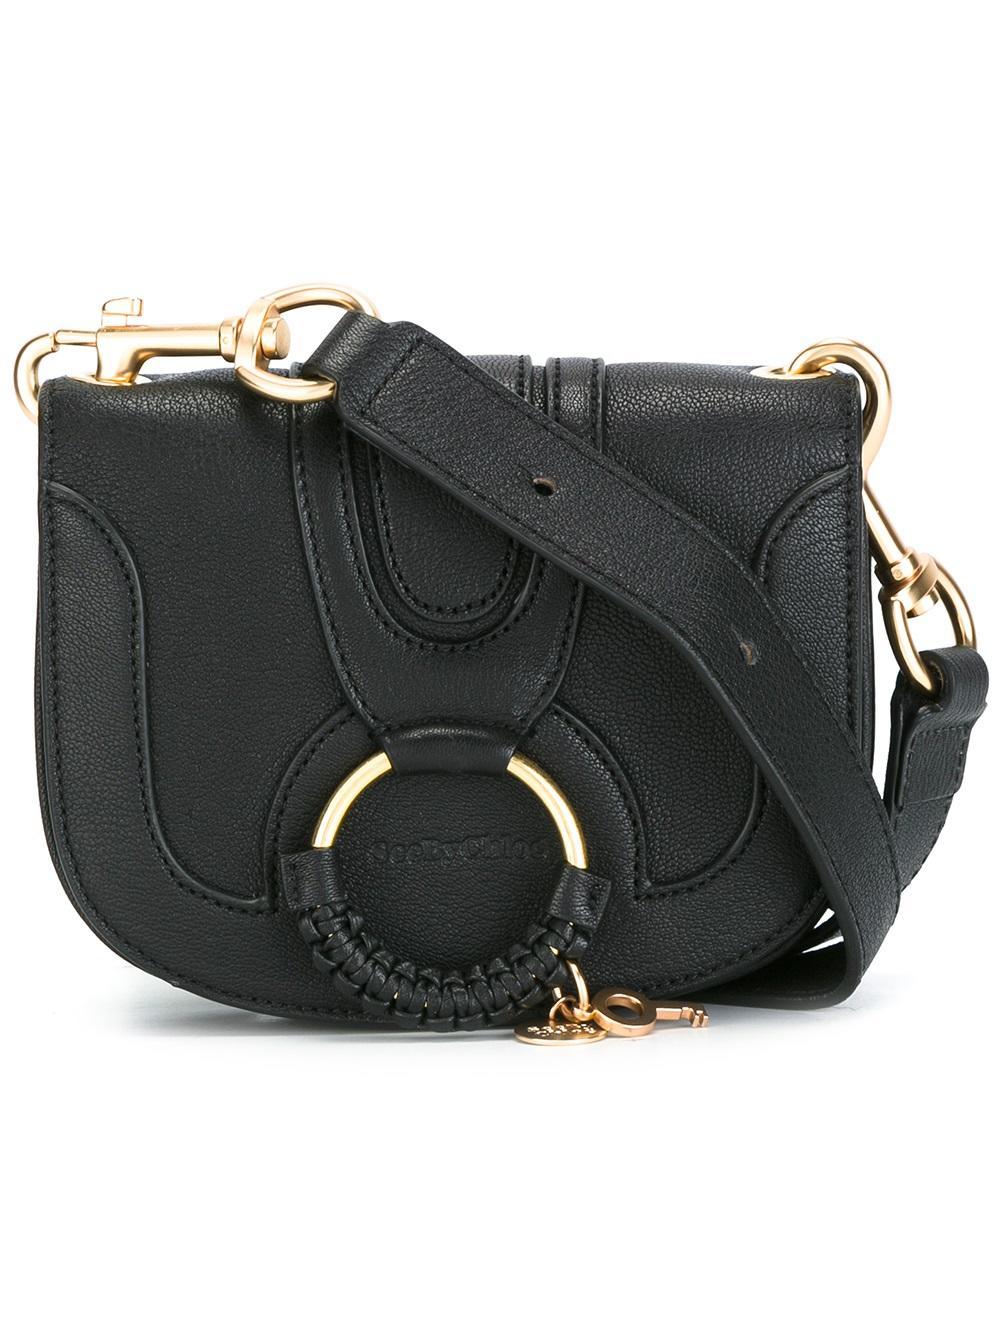 See by chloé Hana Crossbody Bag in Black - Save 3% | Lyst